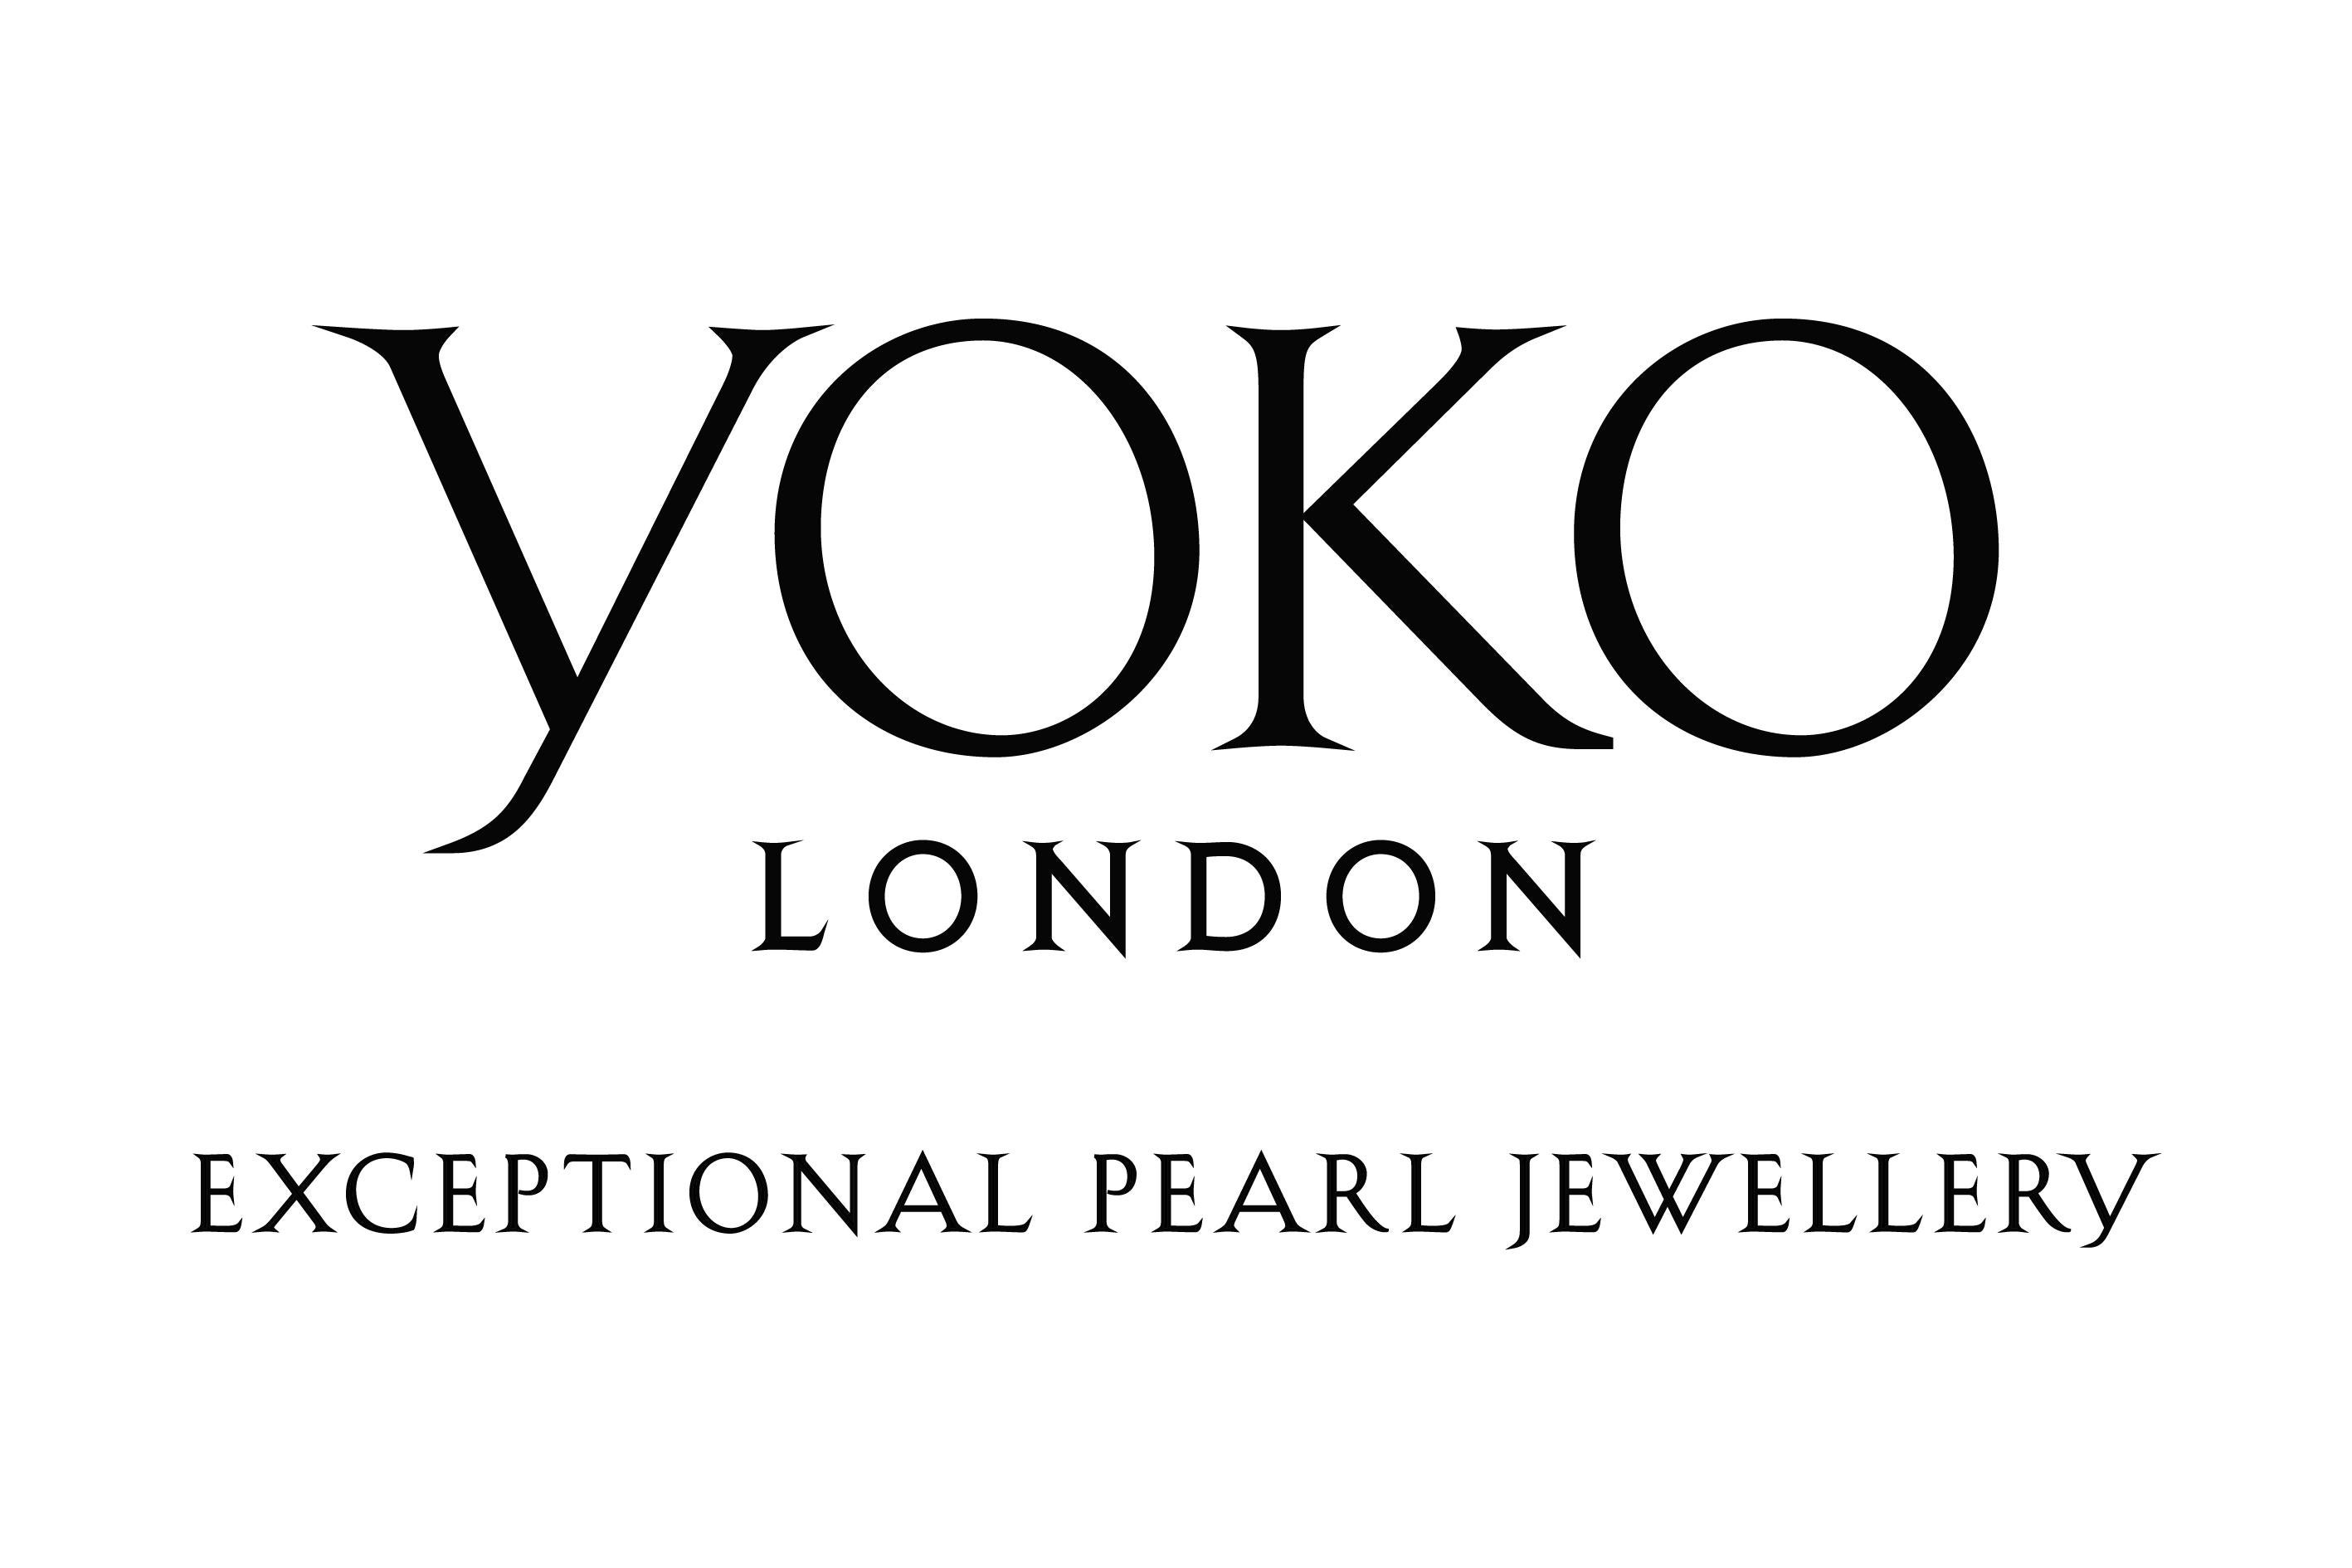 Yoko London South Sea Pearl and Diamond Earrings in 18 Karat White Gold 4